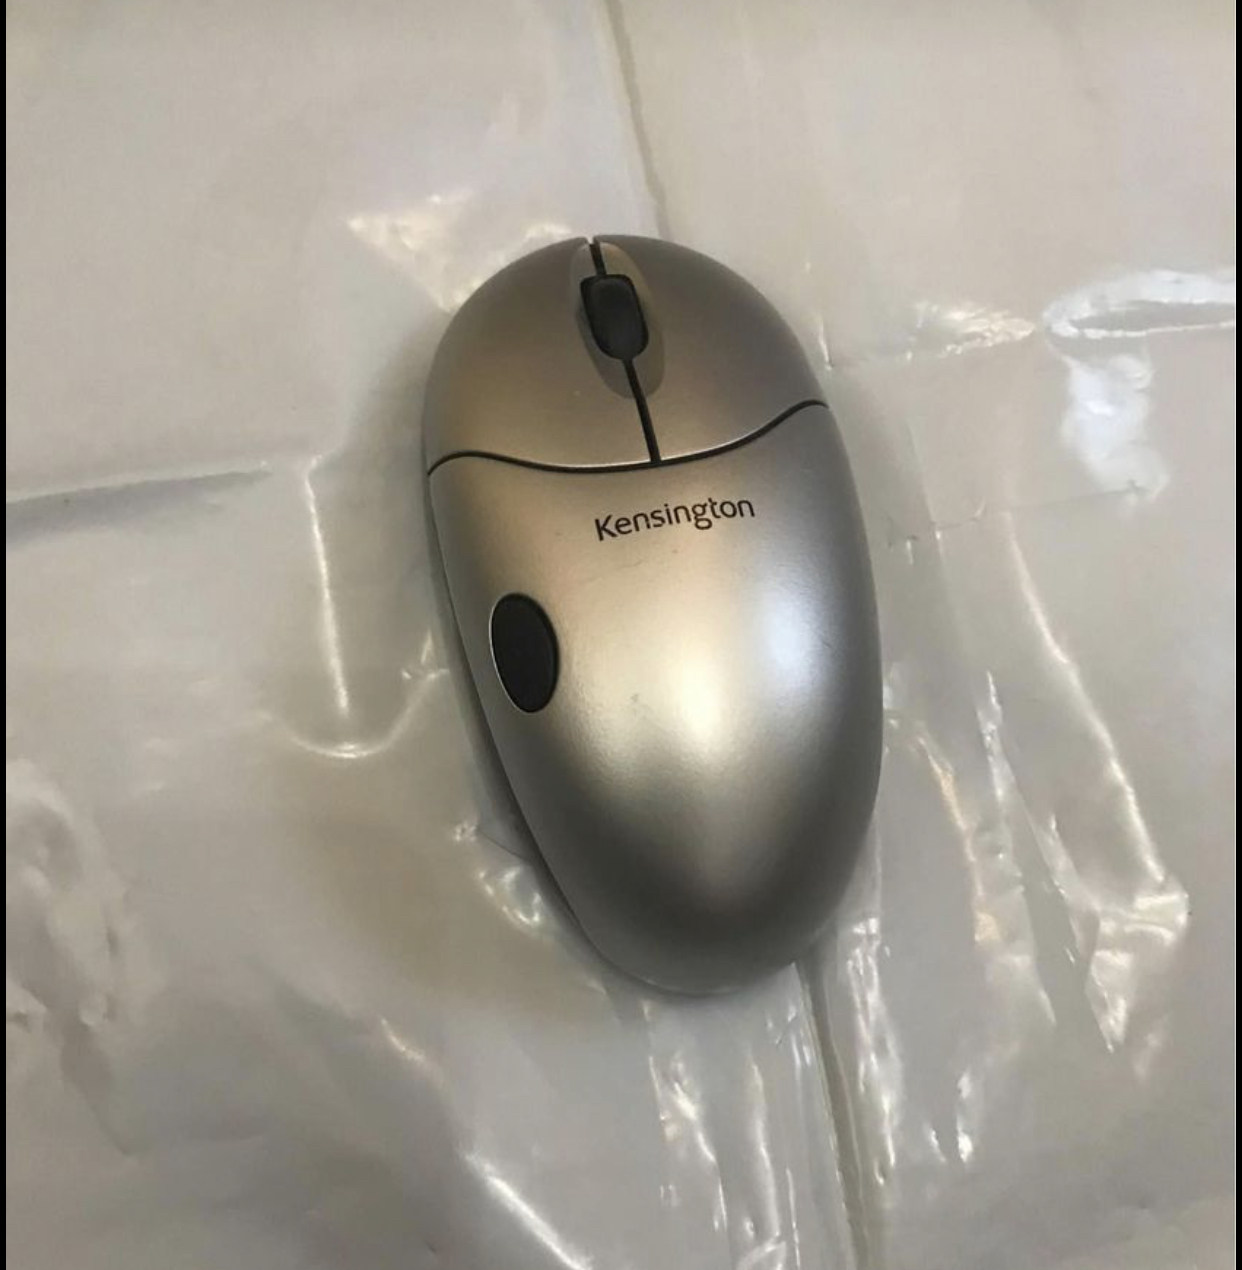 Kensington wireless mouse